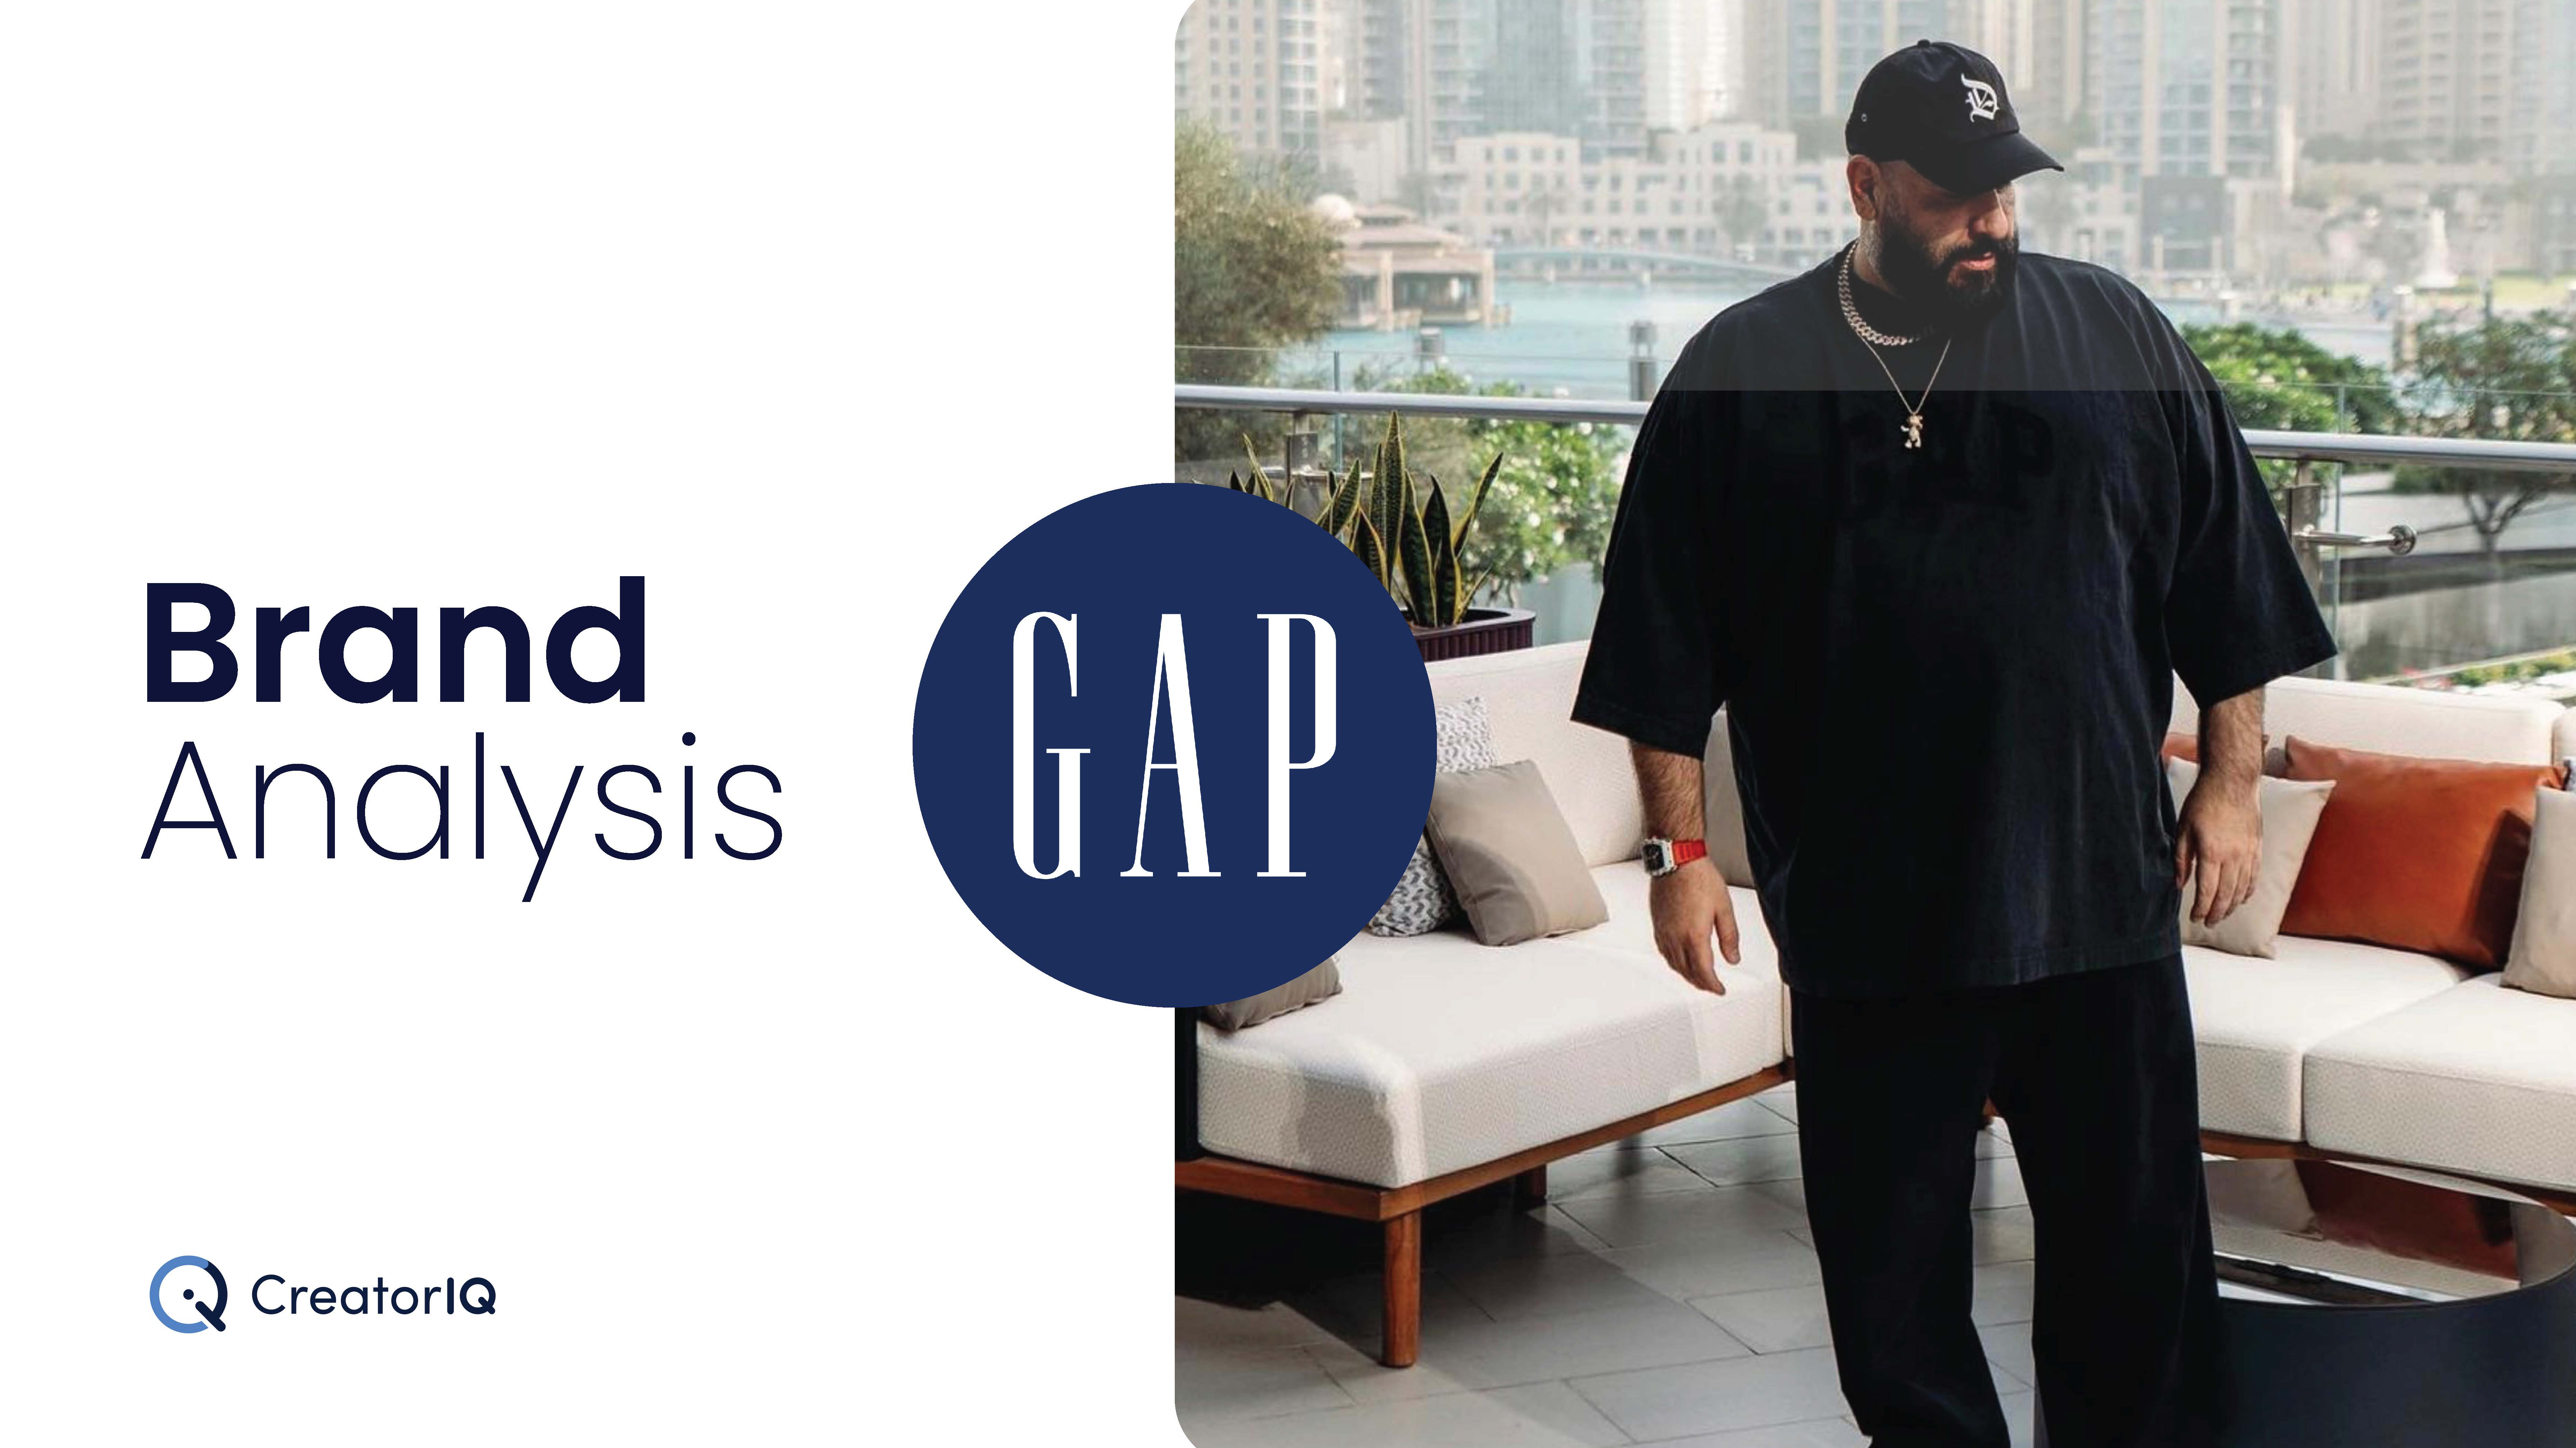 Brand Analysis — GAP